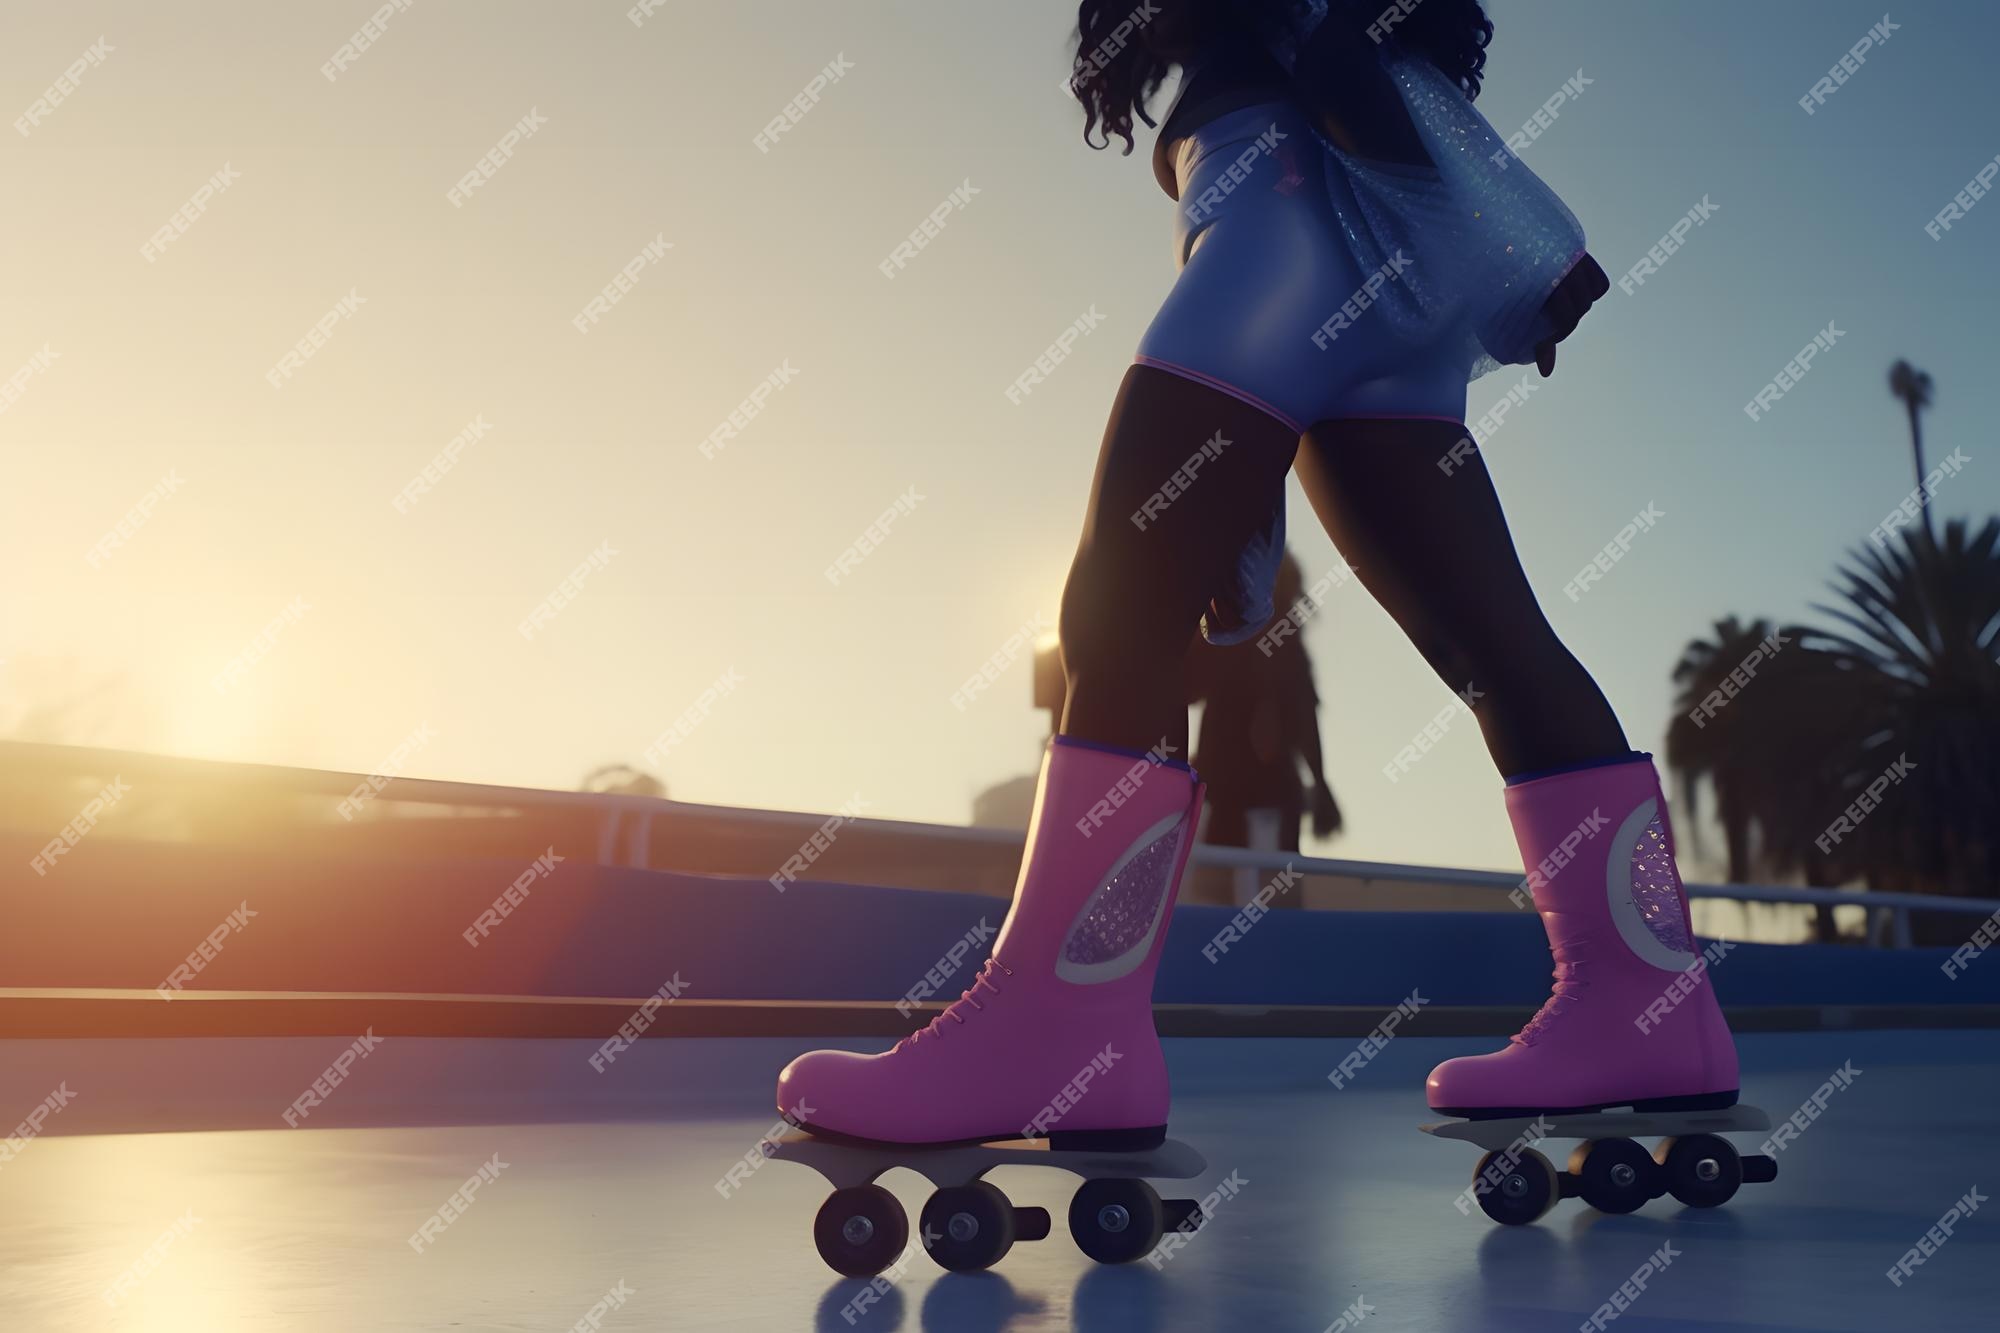 Roller Skating Woman Images - Free Download on Freepik